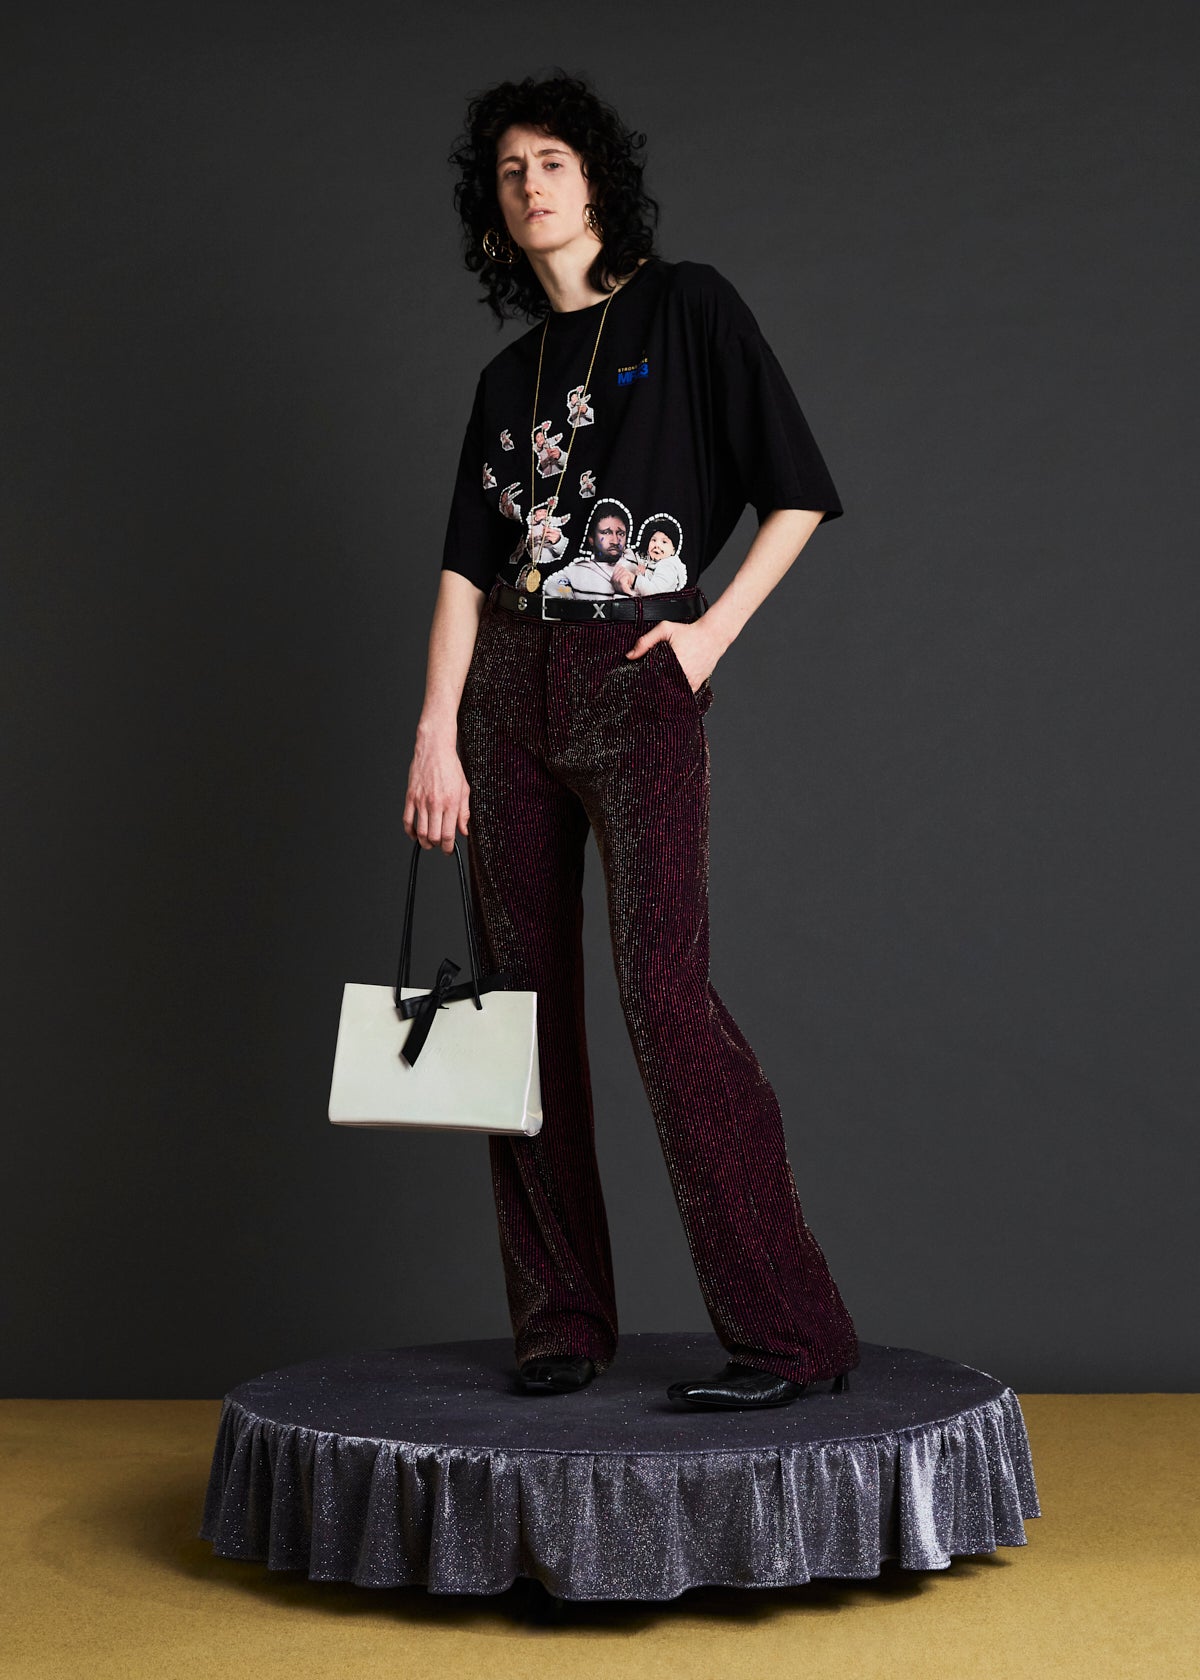 Martine Rose Spring 2021 Menswear Collection